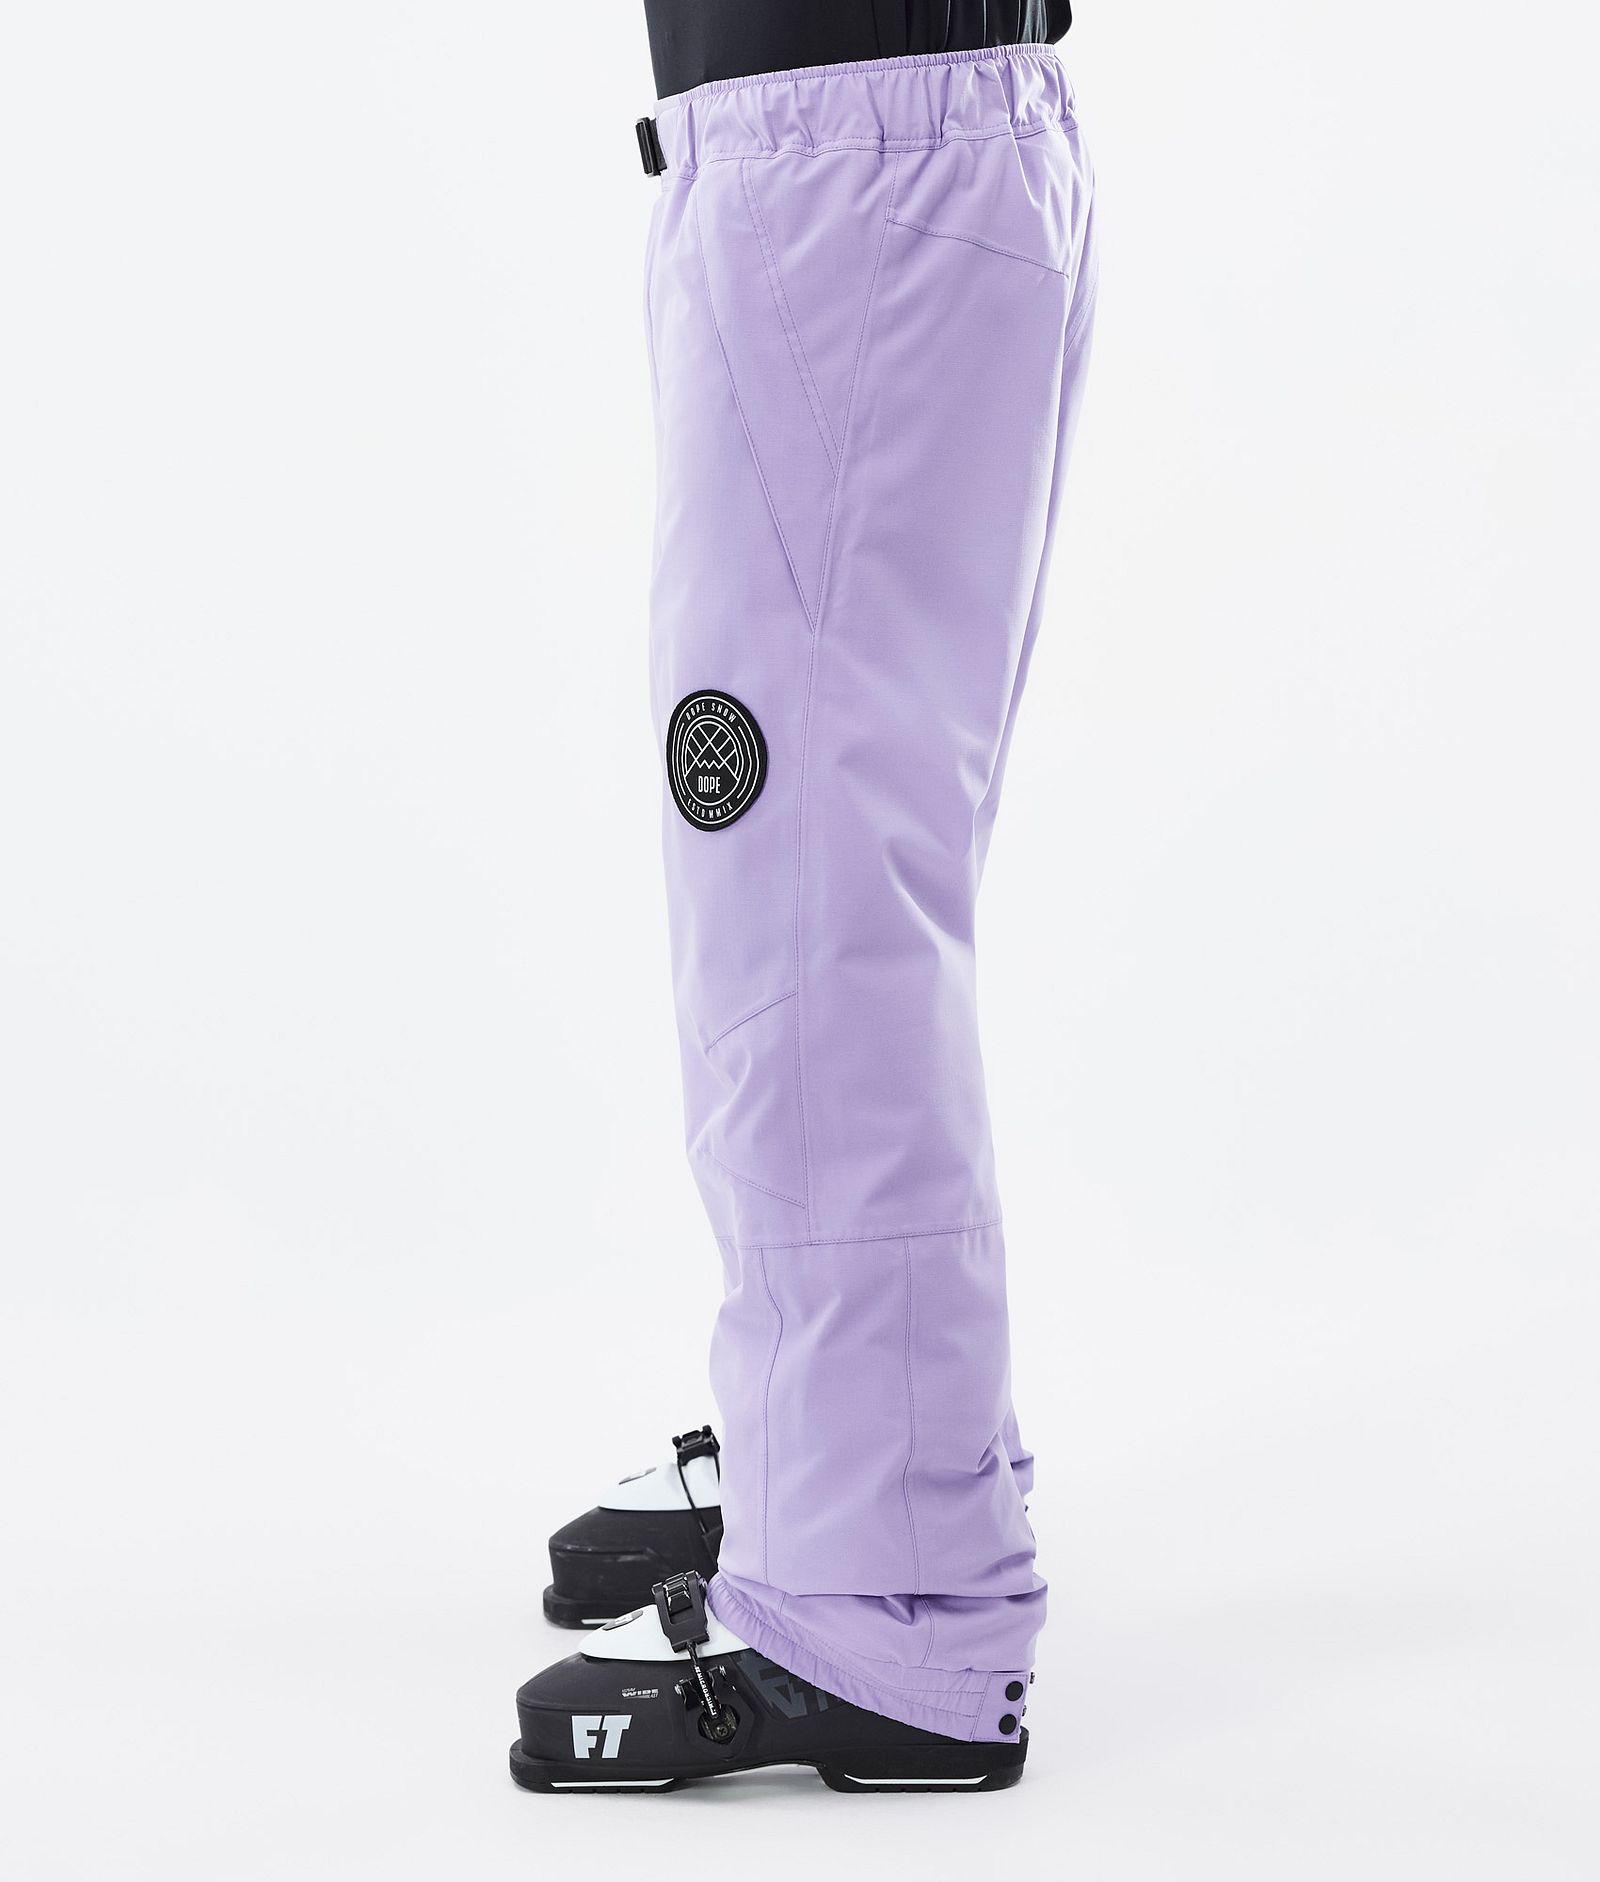 Blizzard 2022 Pantalones Esquí Hombre Faded violet